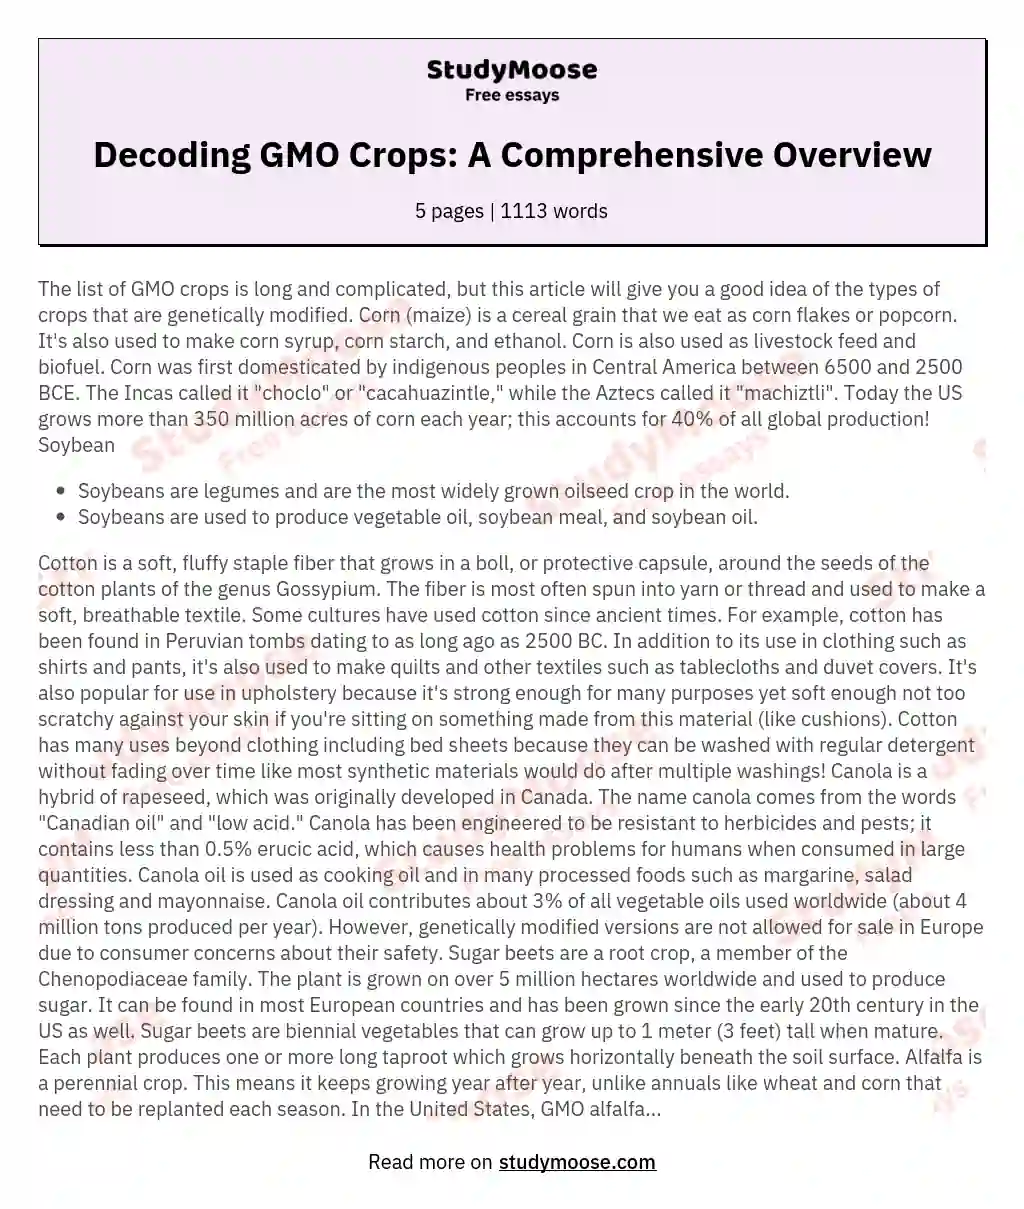 Decoding GMO Crops: A Comprehensive Overview essay